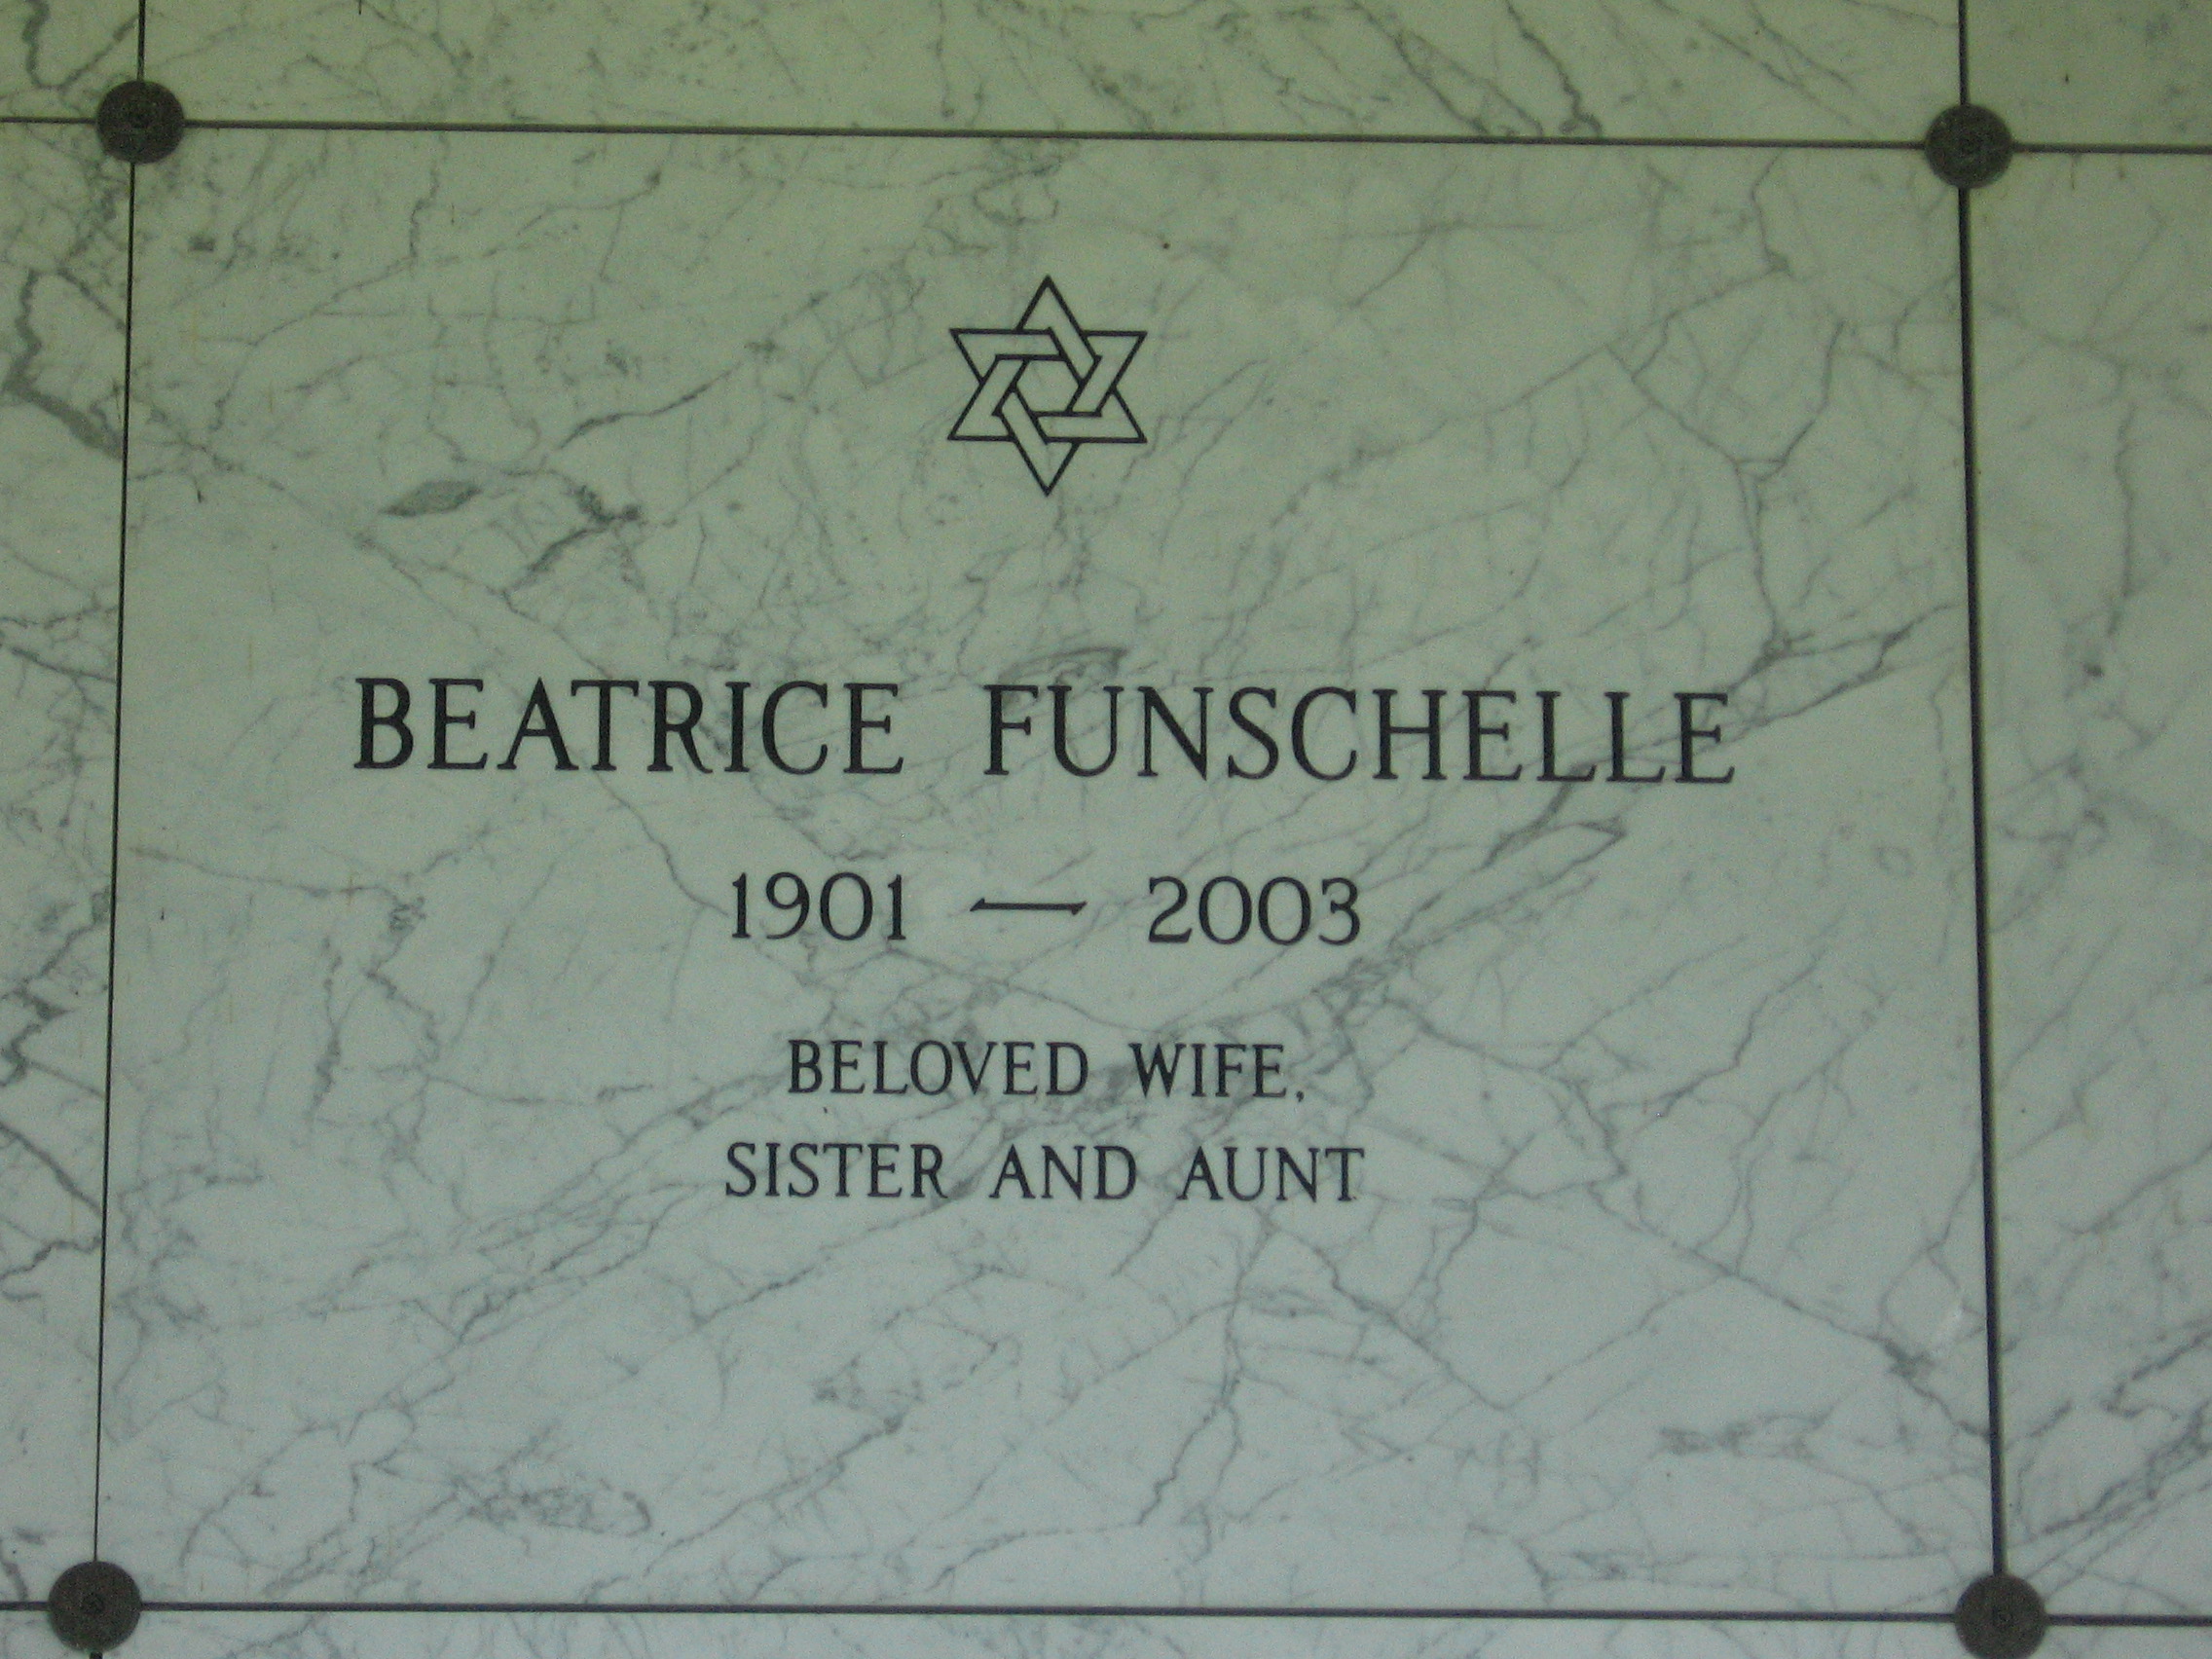 Beatrice Funschelle